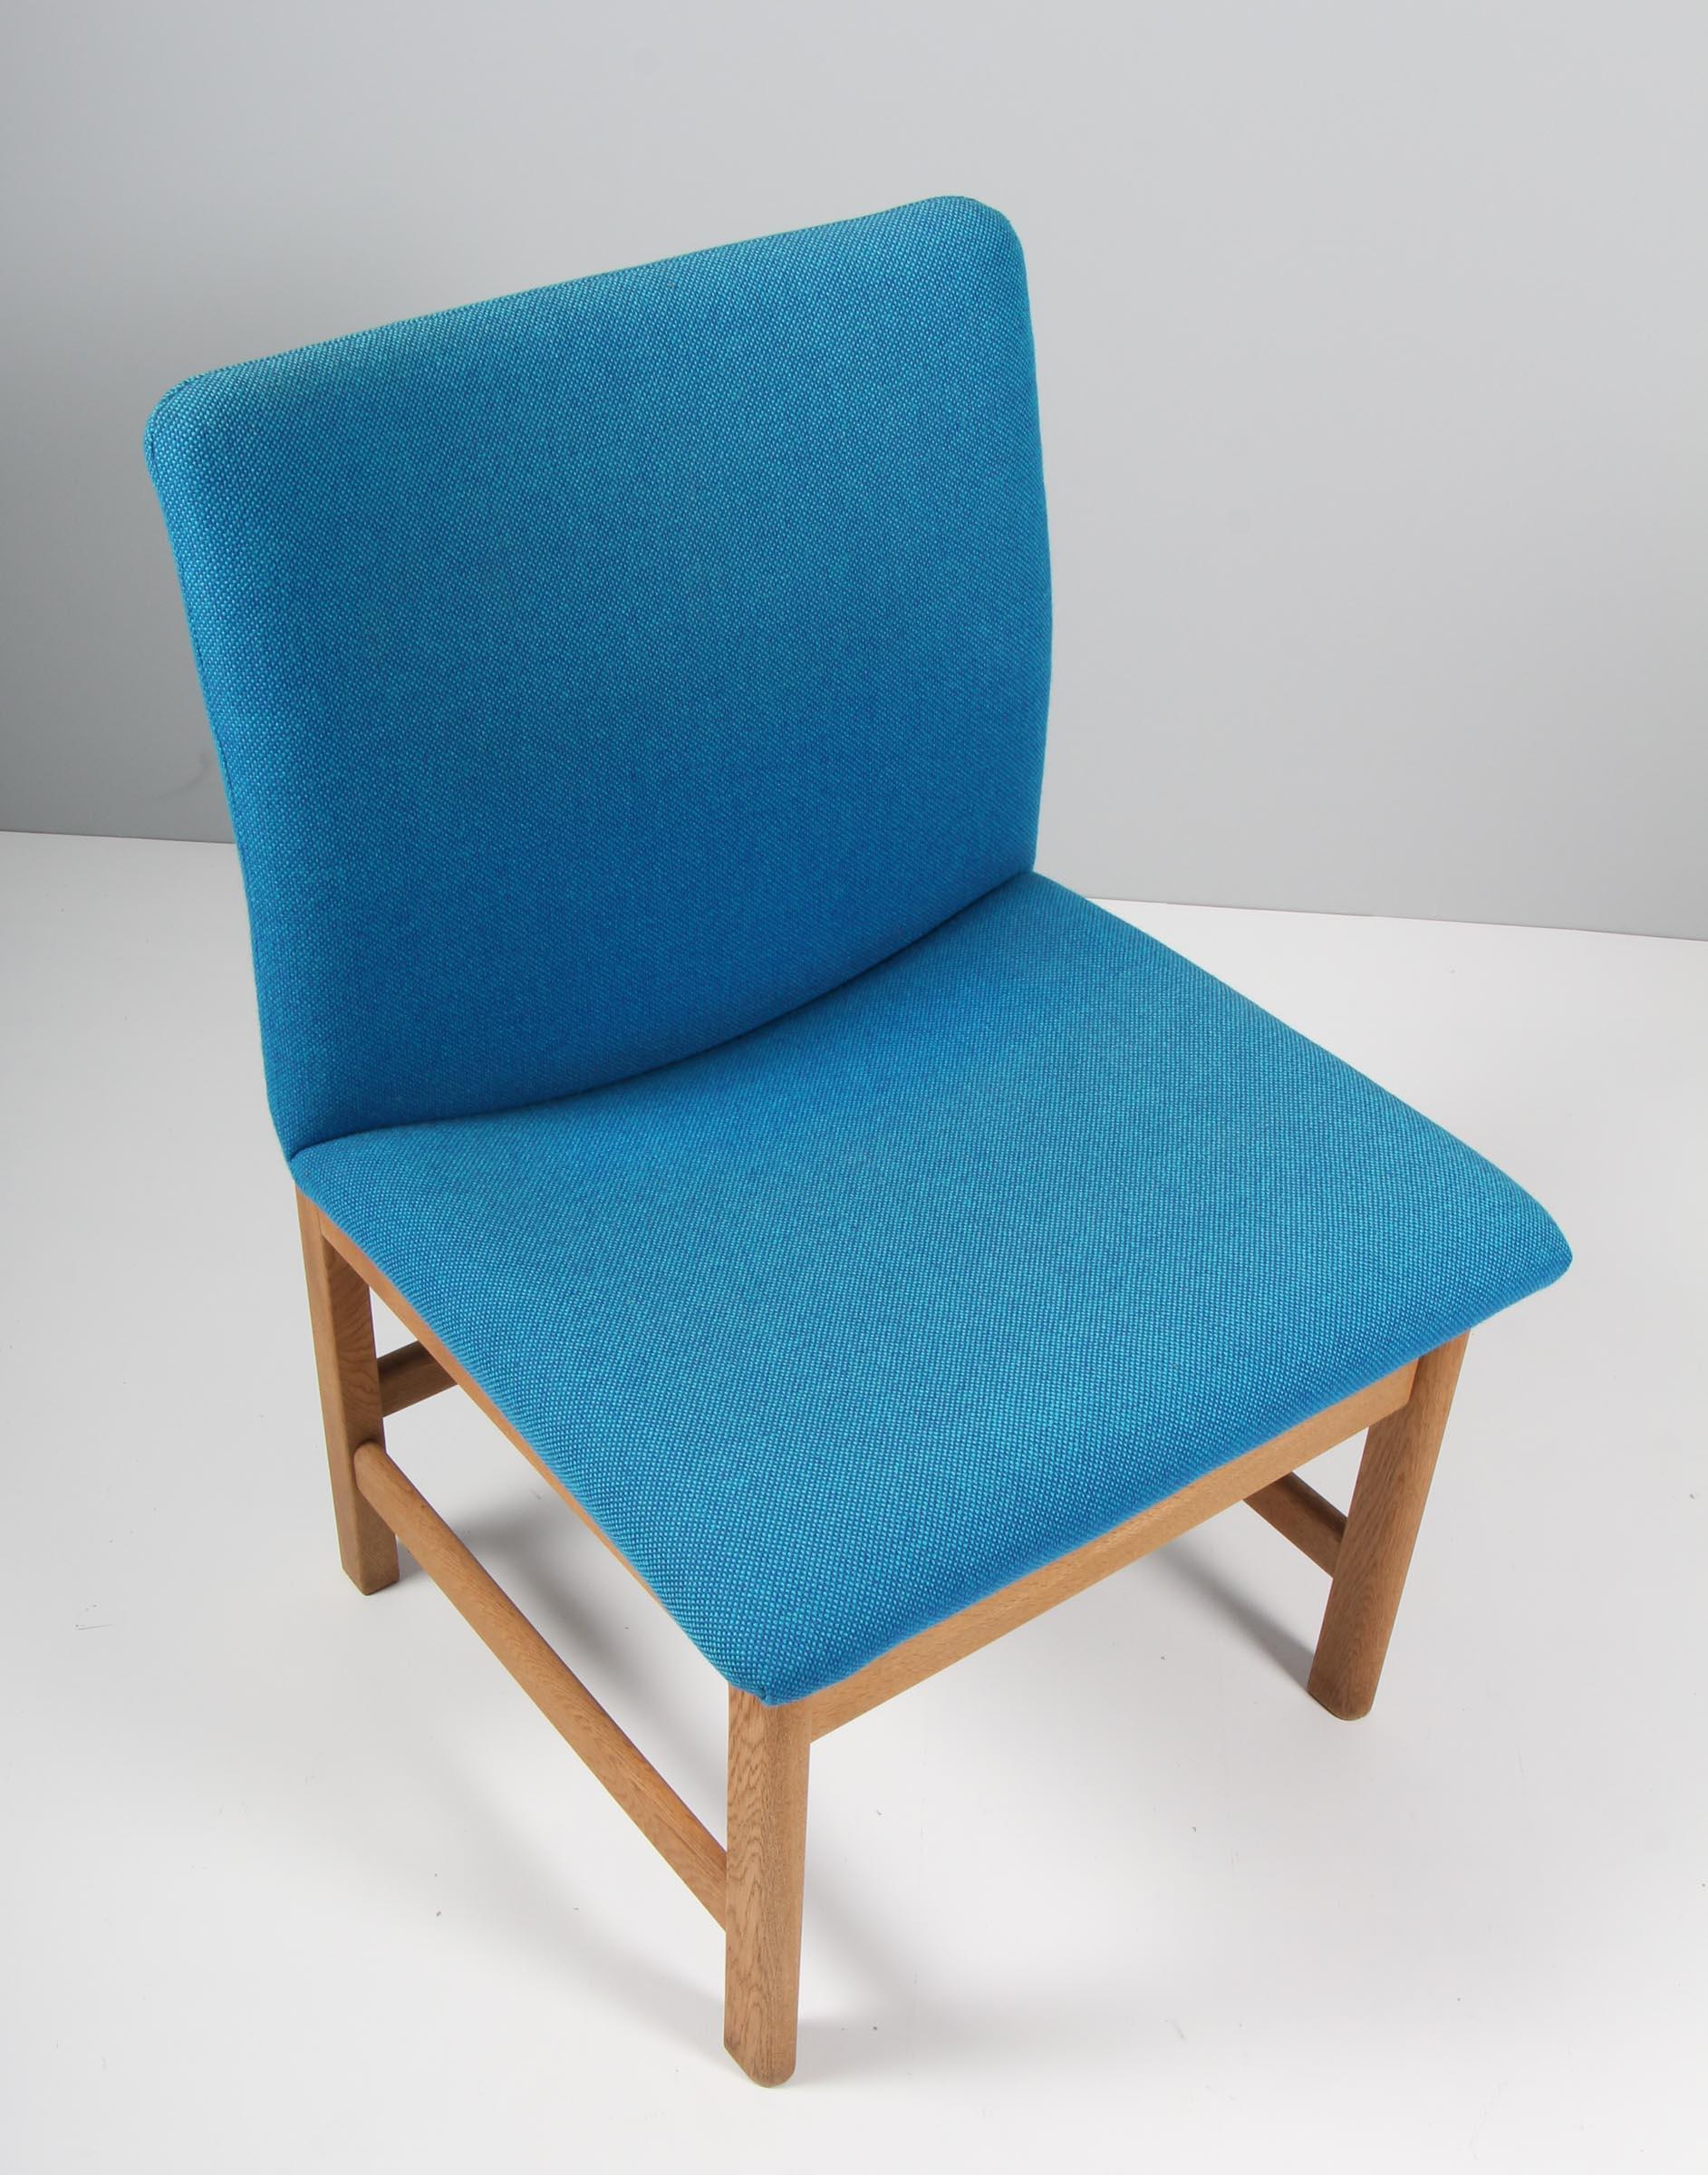 Børge Mogensen lounge chair upholstered with Kvadrat Hallingdal.

Frame of oak.

Model 3231 rarely seen, made by Fredericia furniture.